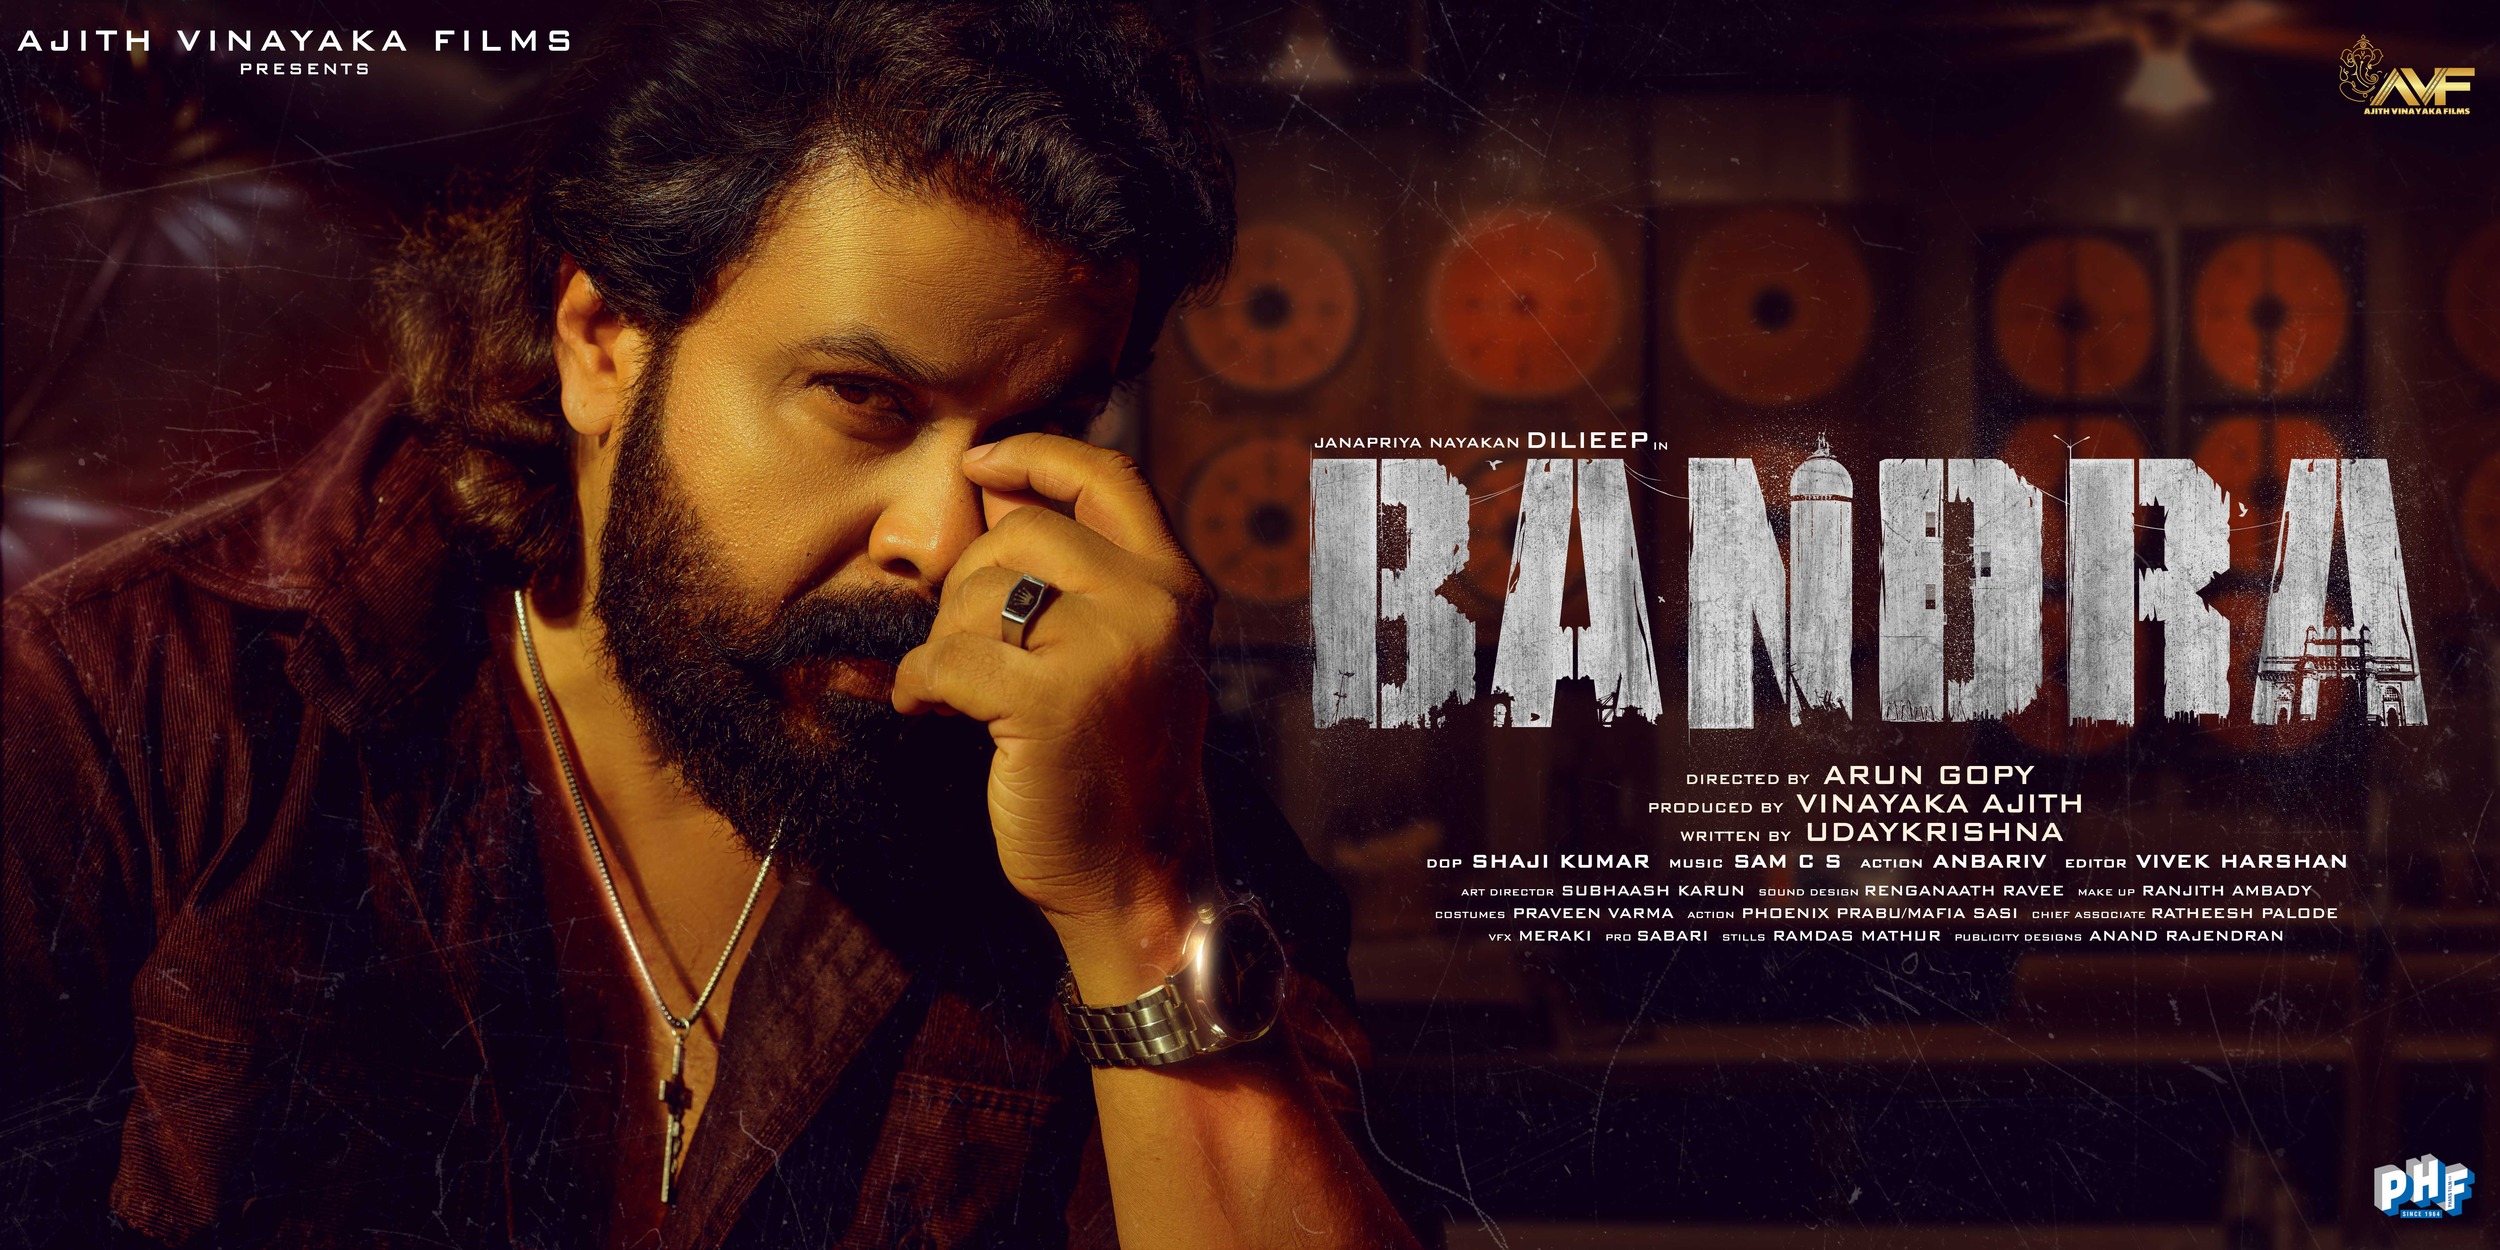 Mega Sized Movie Poster Image for Bandra (#5 of 11)